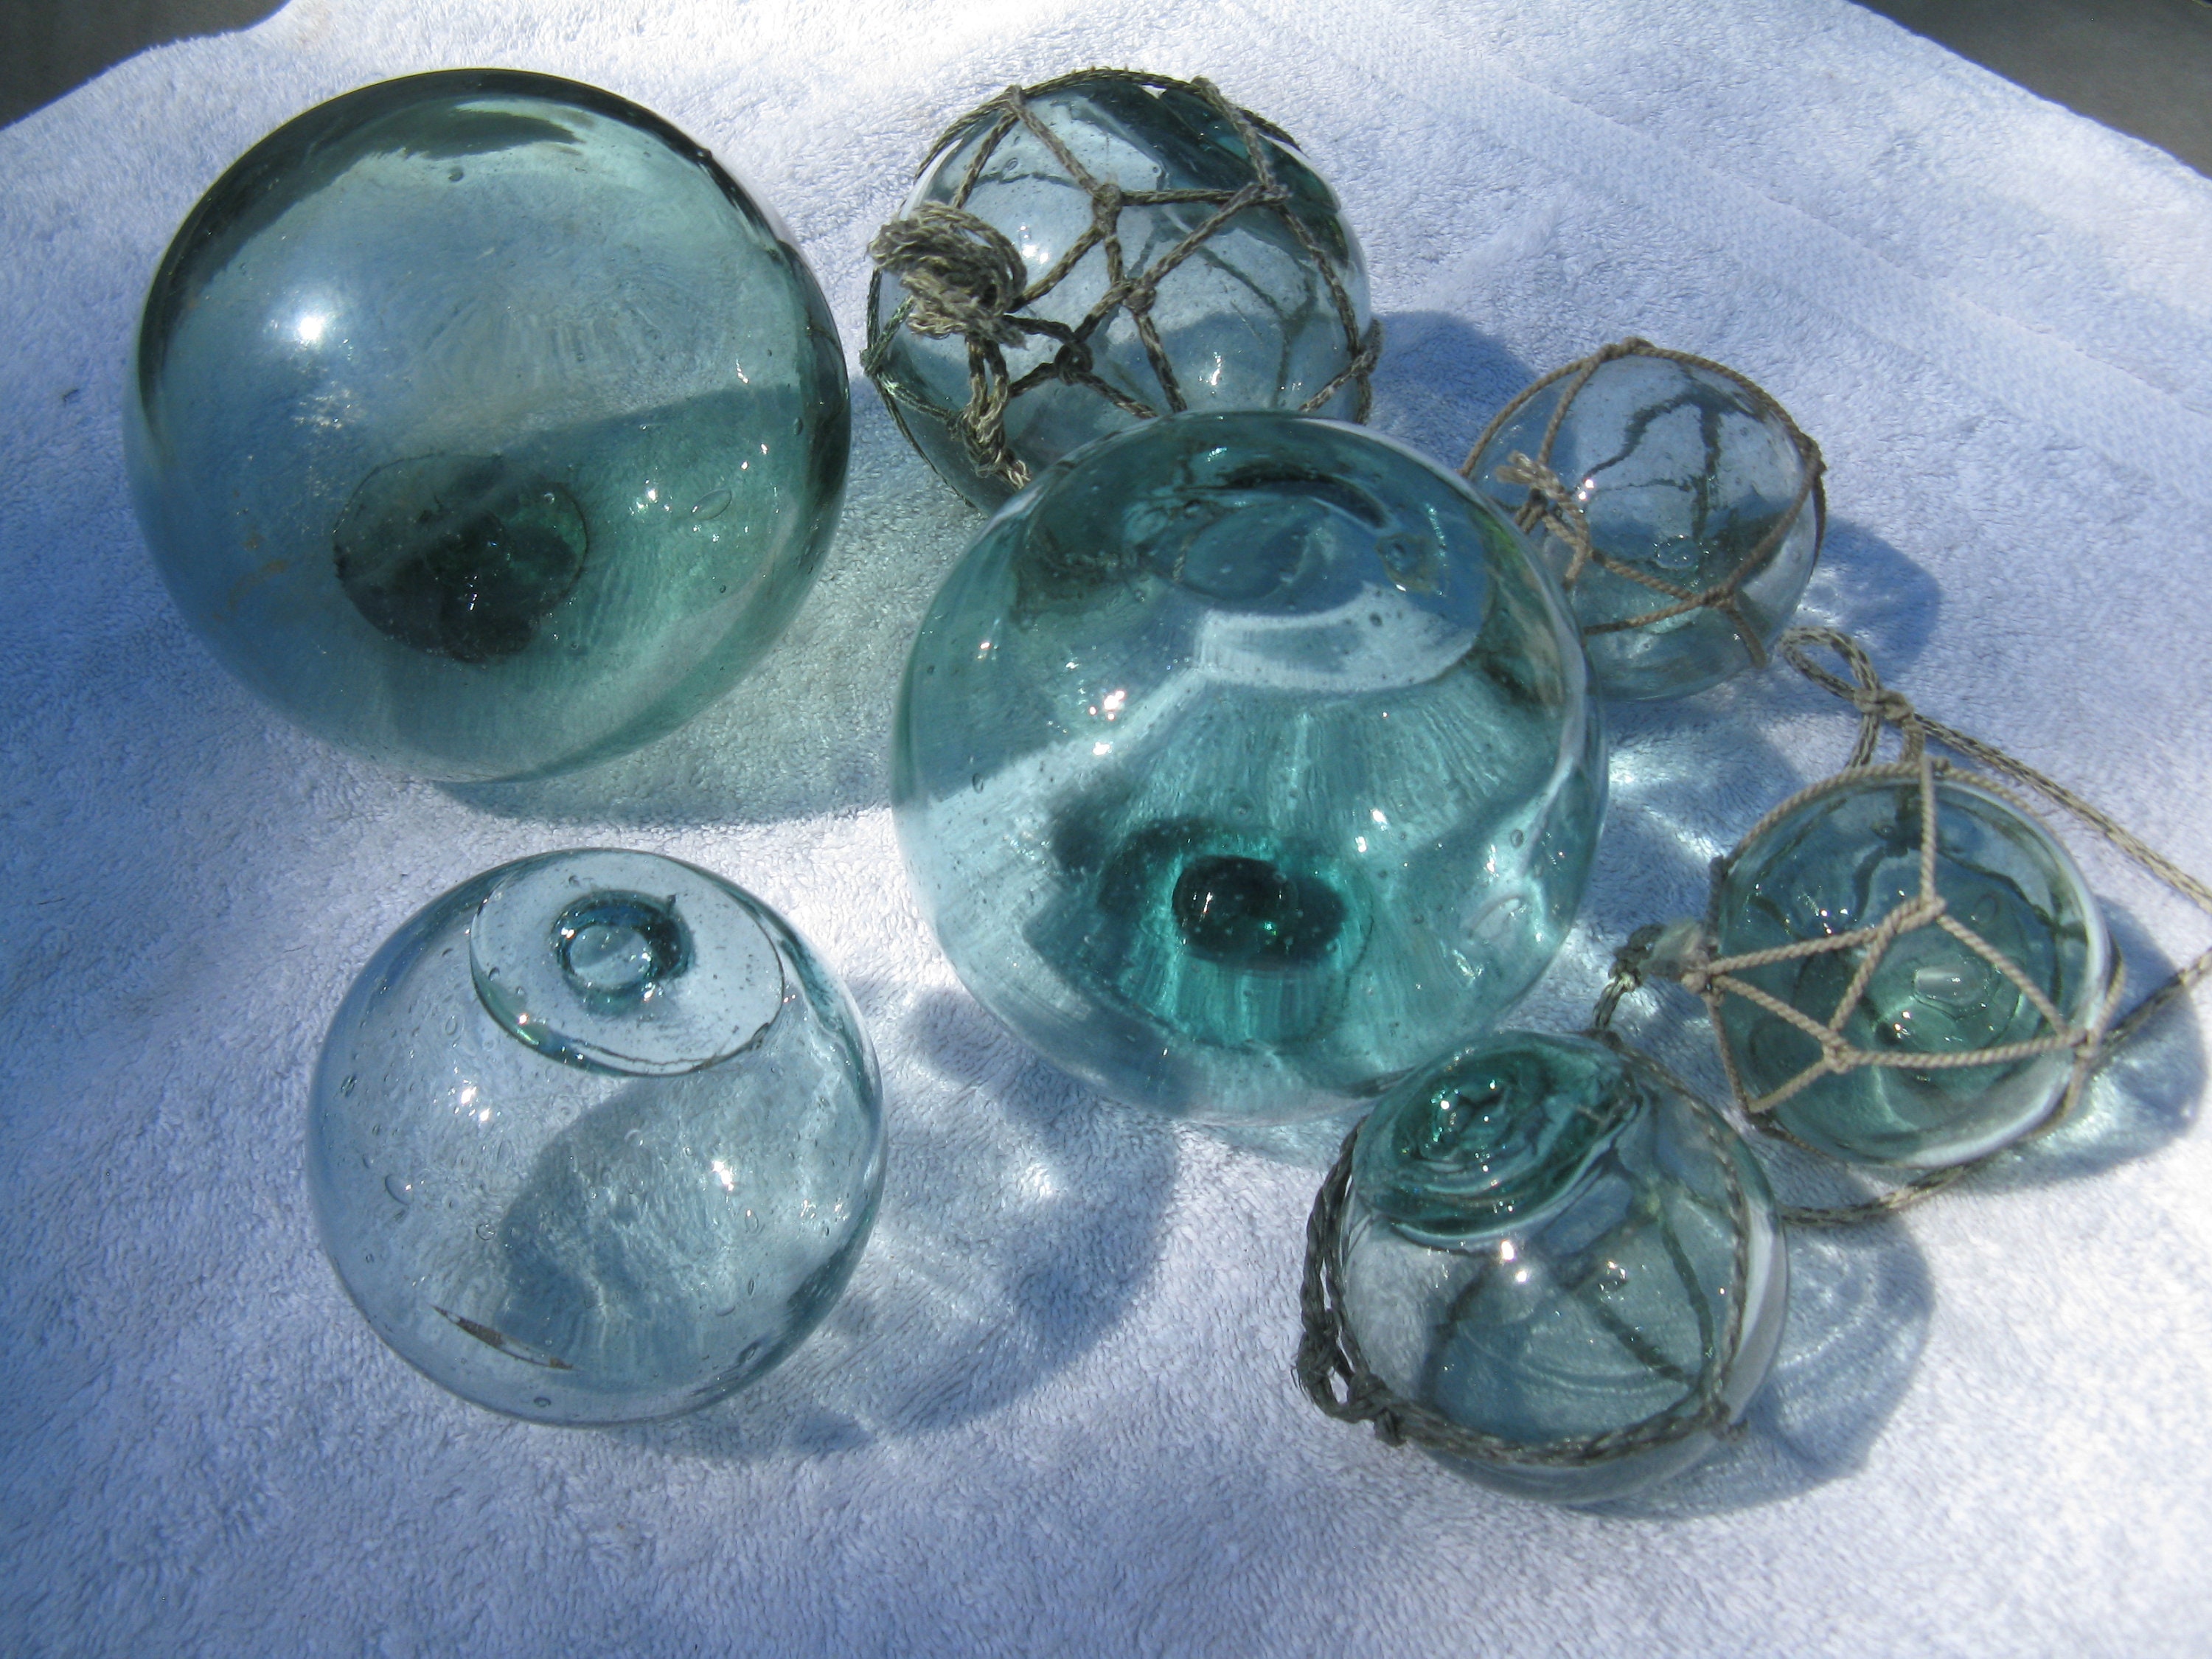 Starter Group of 7 Japanese Glass Fishing Floats, 2.54 Glass Floats,  Starter Kit, Beach House Decor -  Canada